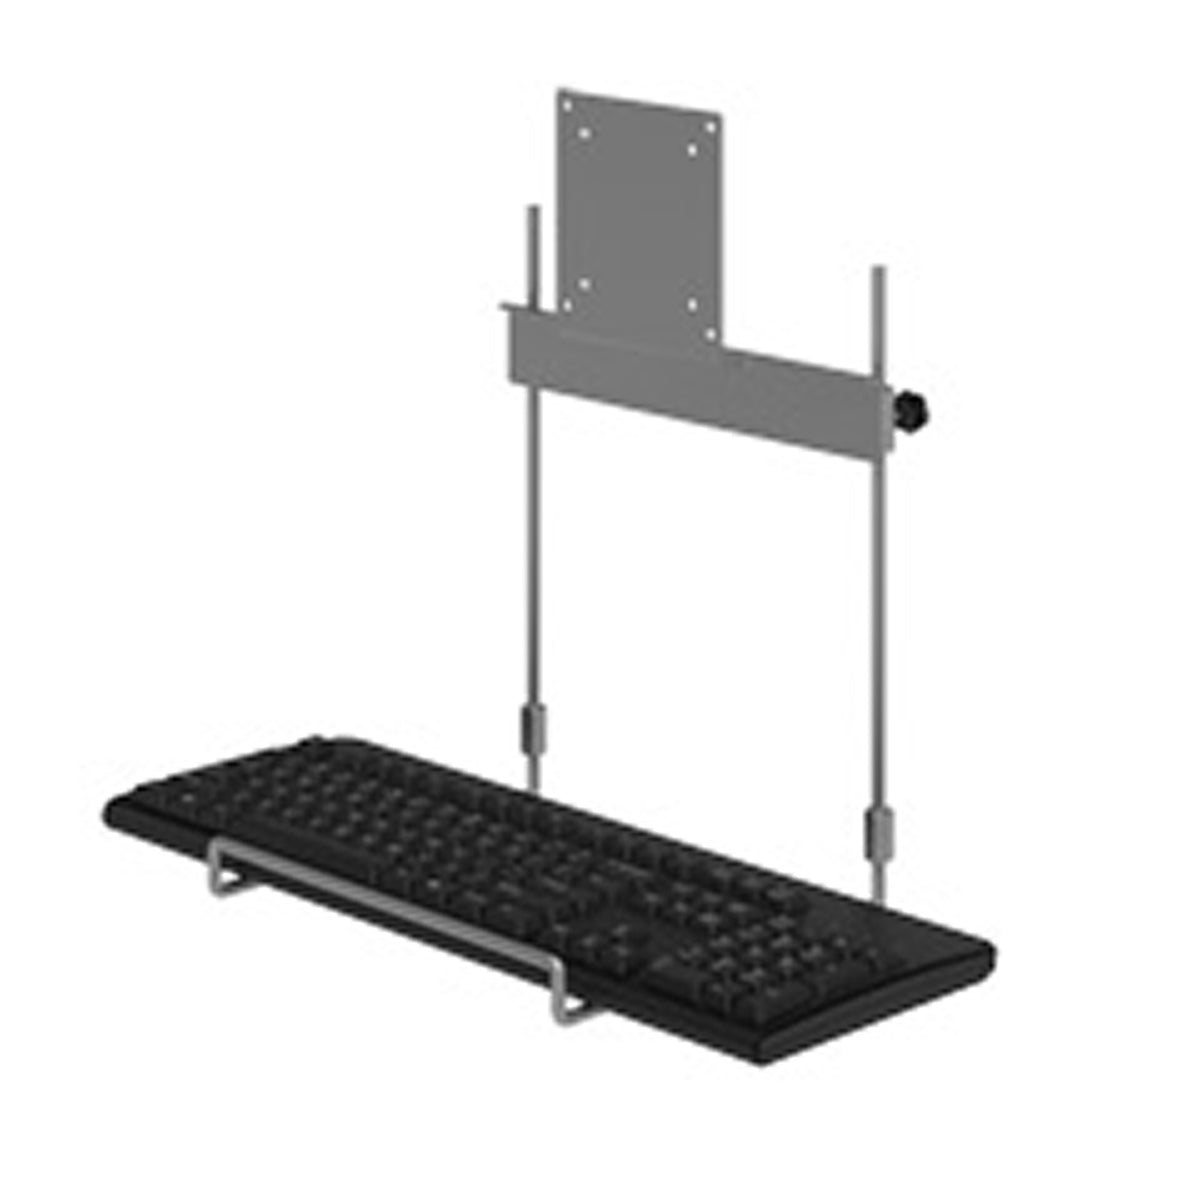 Viewmate keyboard holder - option 592